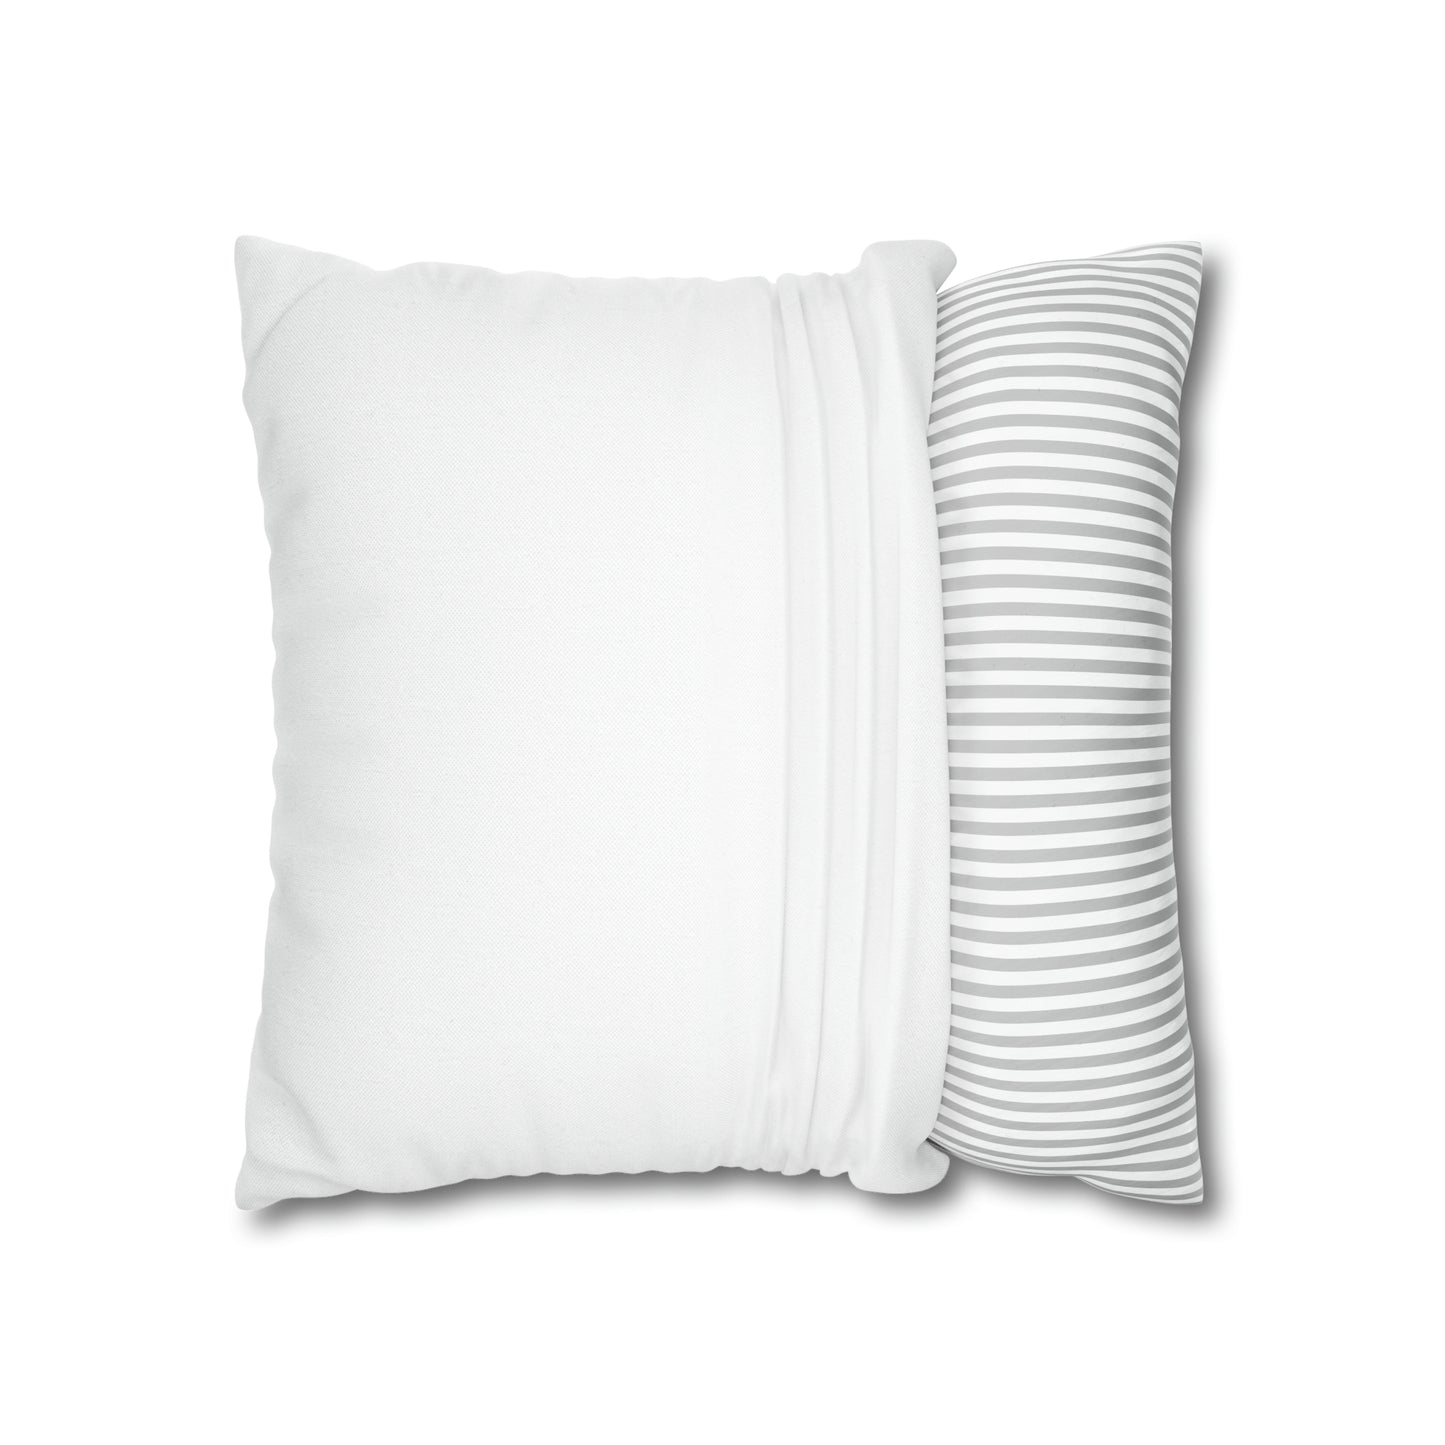 I Love Canada Spun Polyester Square Pillow Case